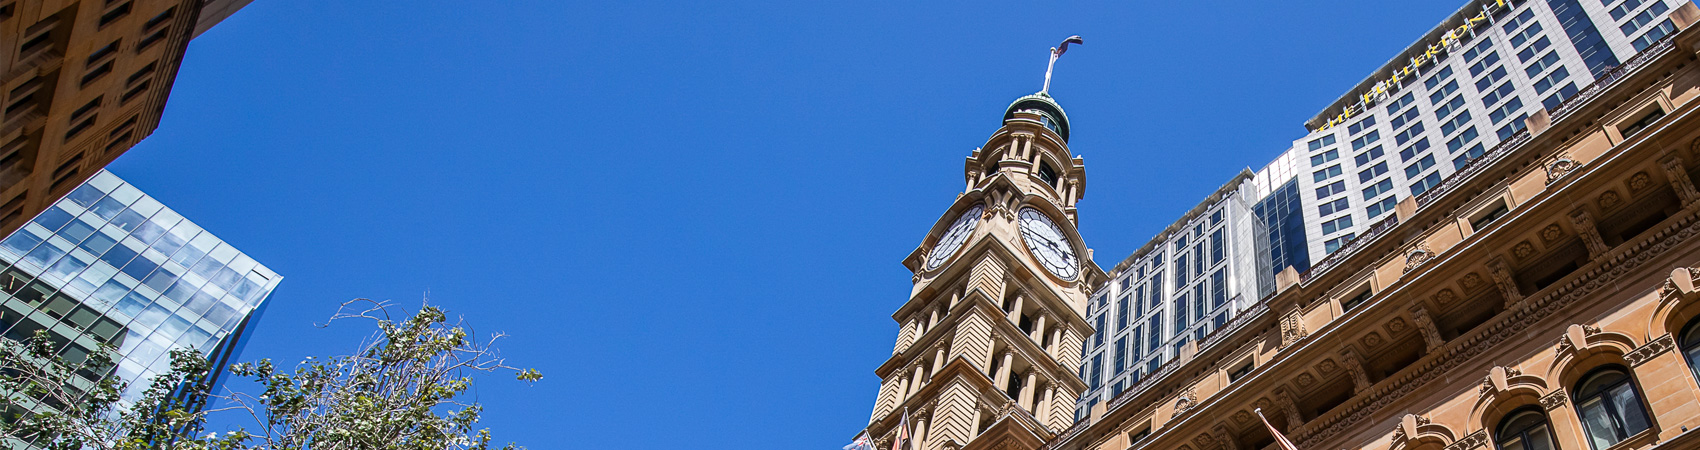 Sydney Martin Place clock tower